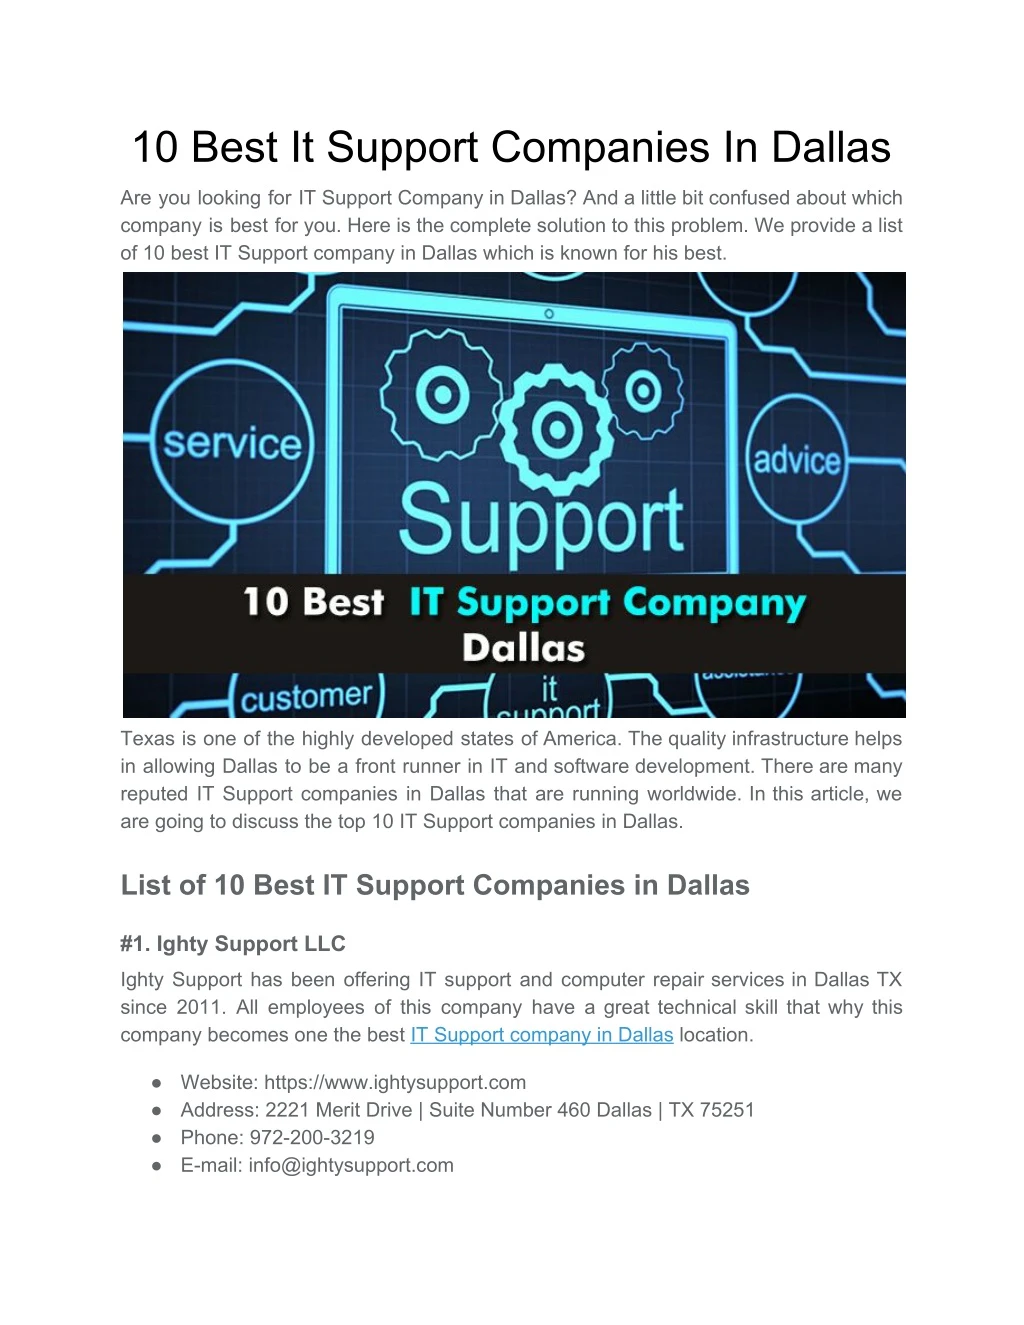 10 best it support companies in dallas